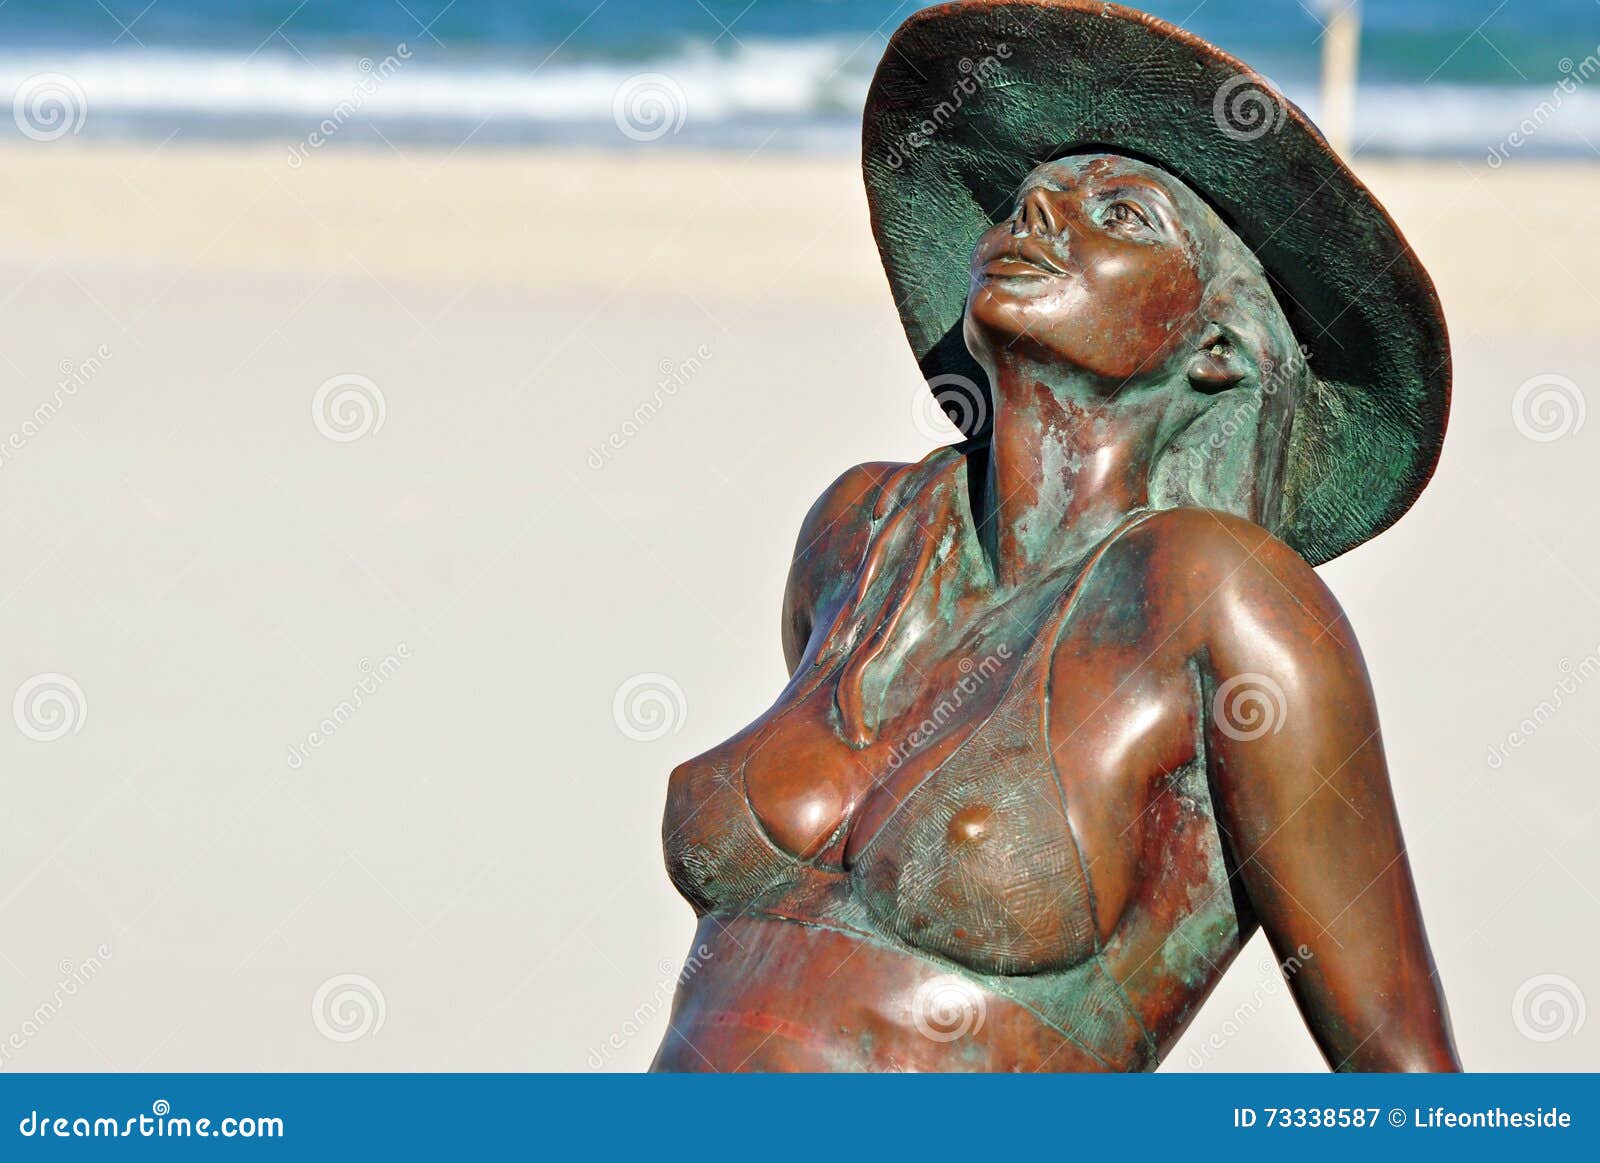 beautiful nude girls on beach voyeur